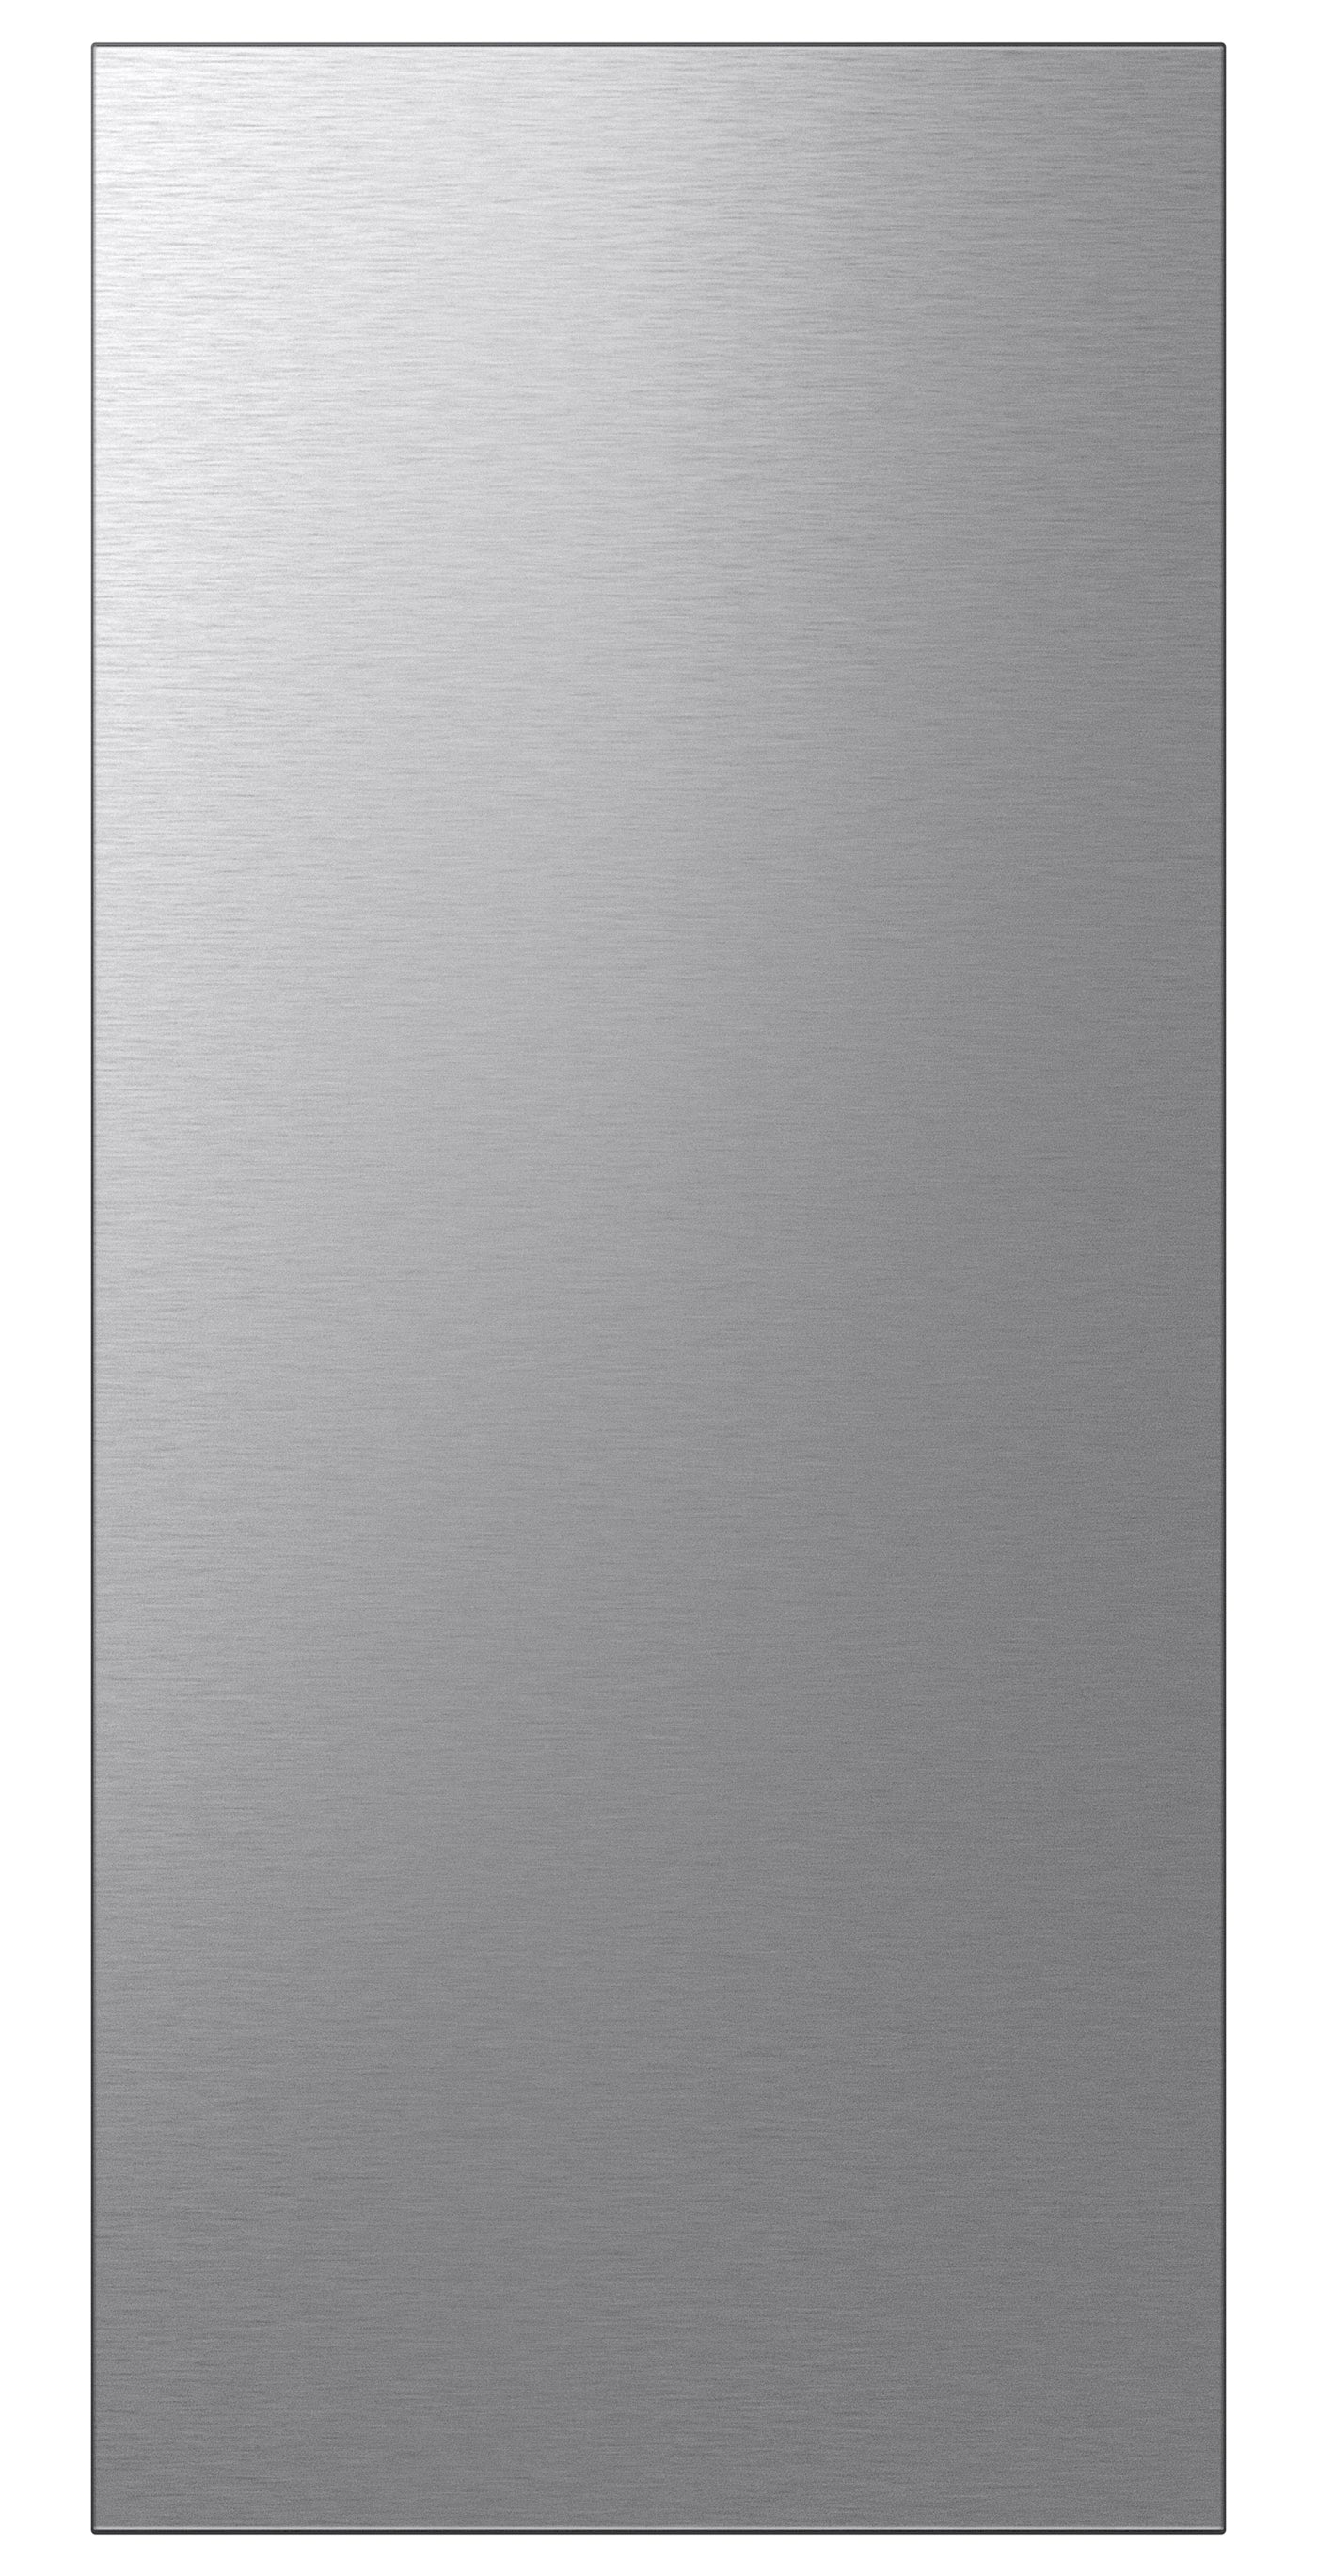 Samsung BESPOKE Stainless Steel Custom Top Panel for 36" 4-Door Flex Refrigerator - RA-F18DUUQL/AA